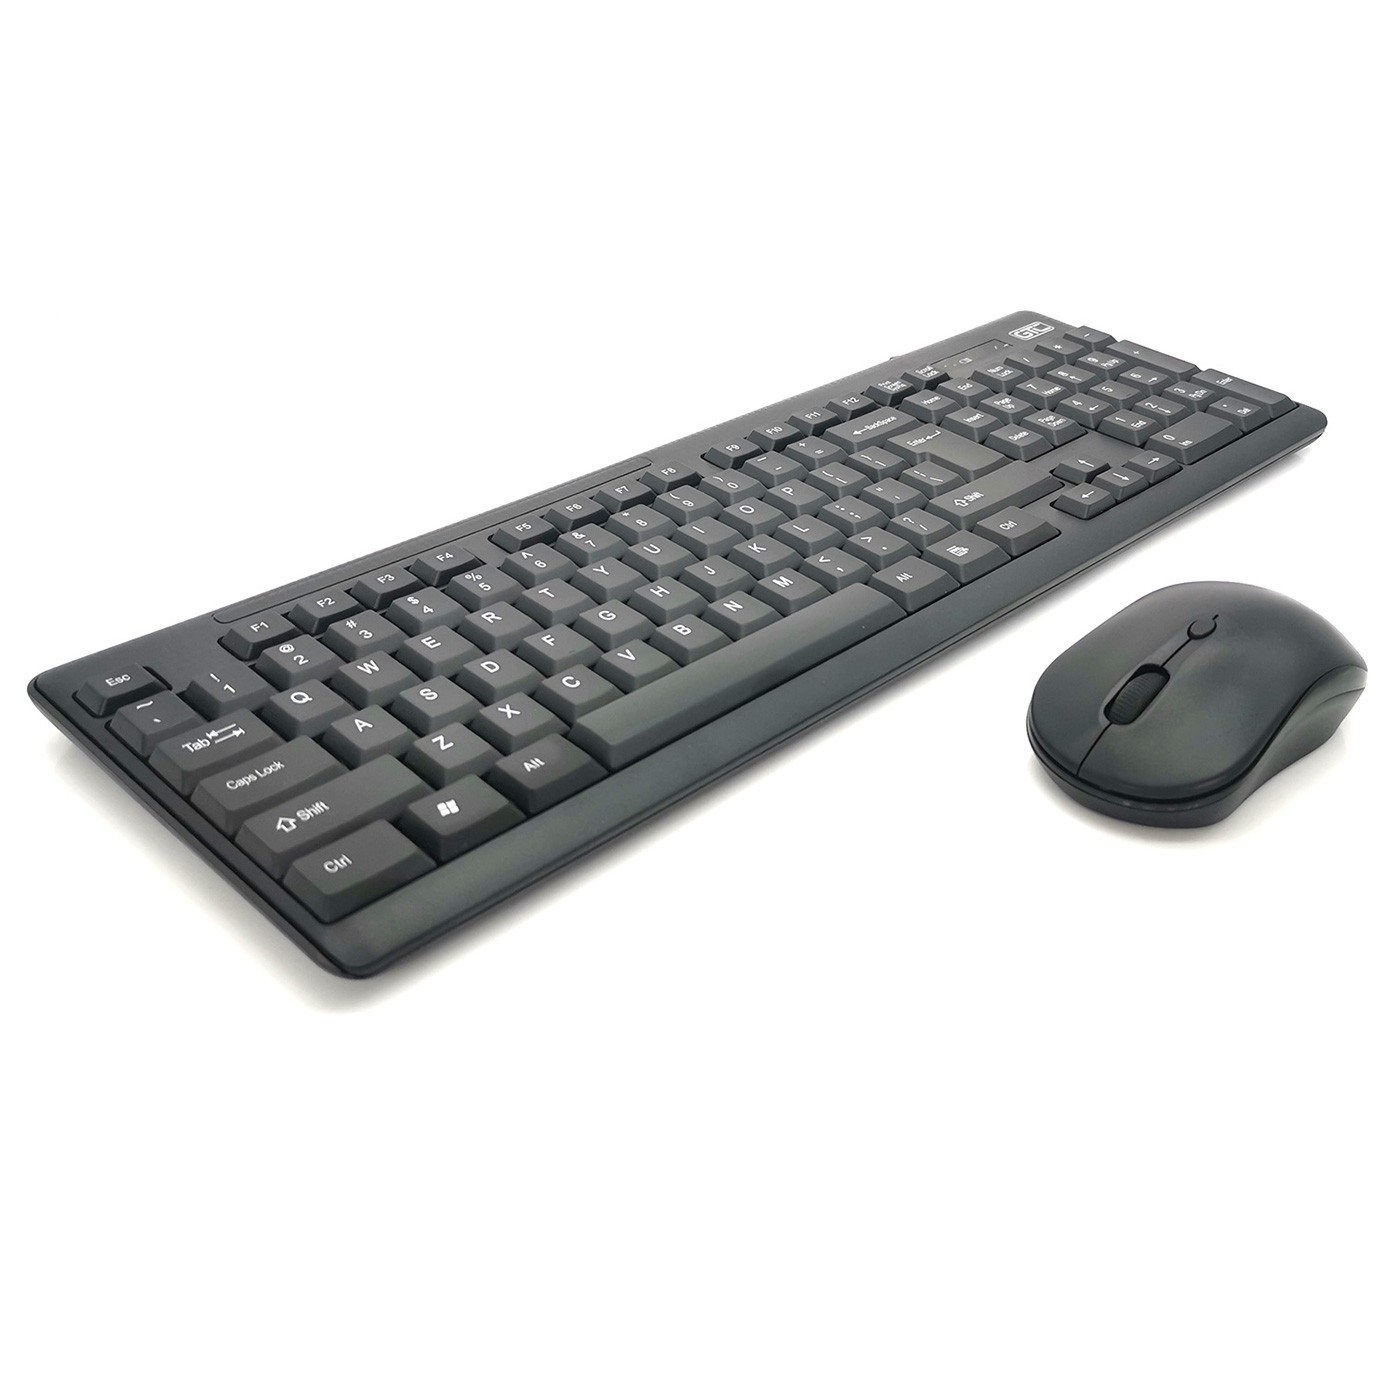 Trending wireless keyboard mouse combos Ultra Thin membrane keyboard Multifunction keyboard office set computer accessory